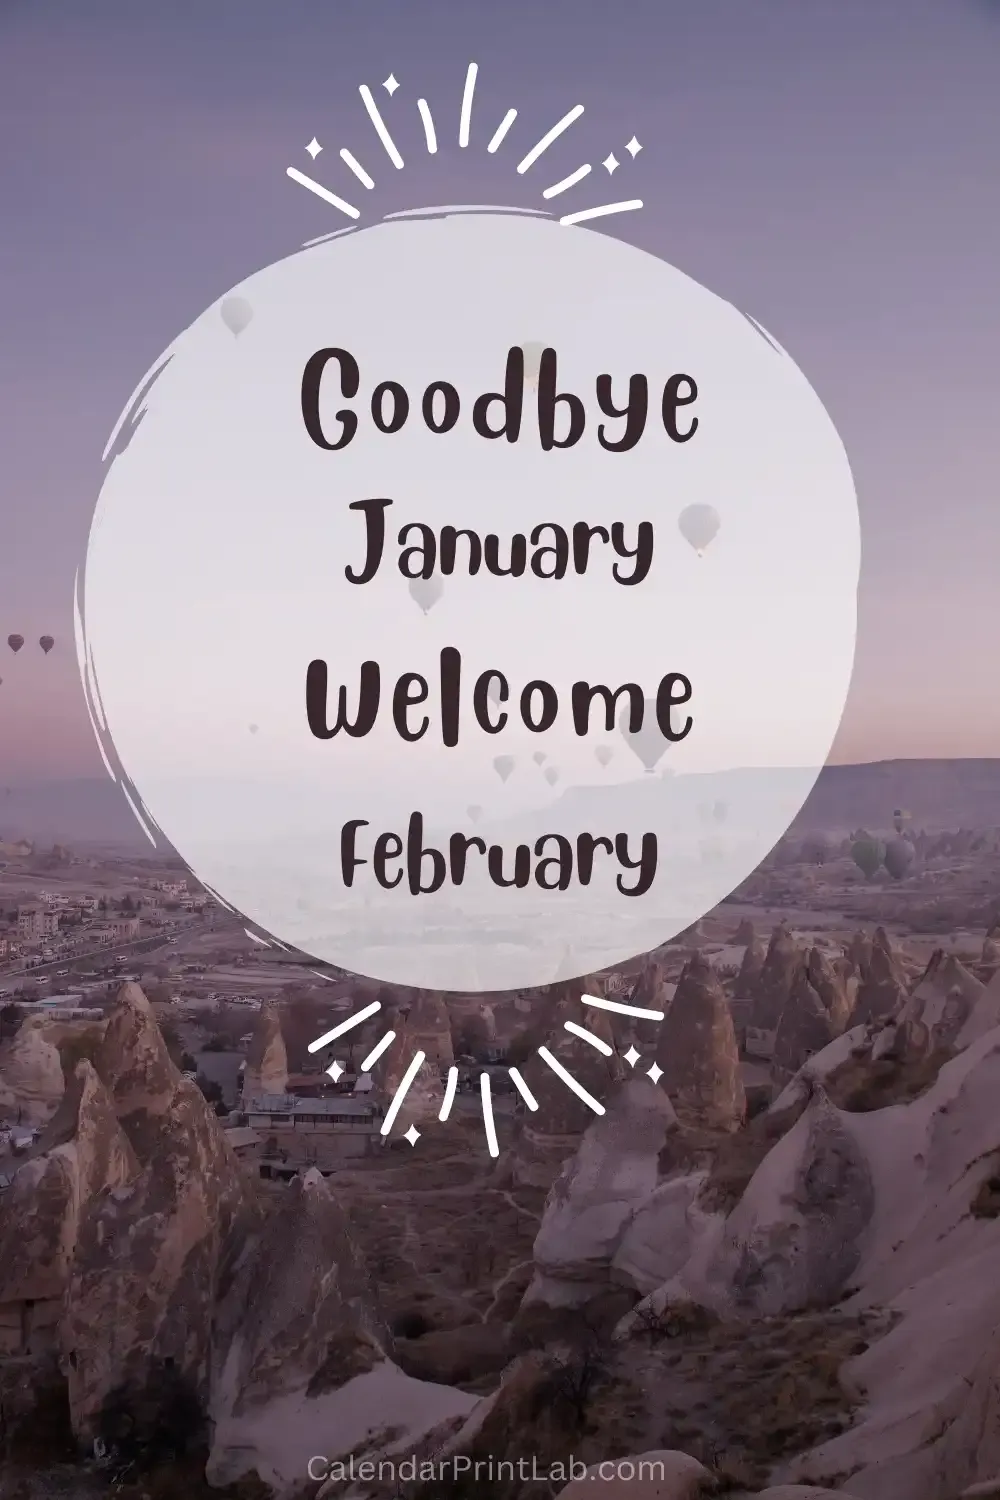 Goodbye January Welcome February Image